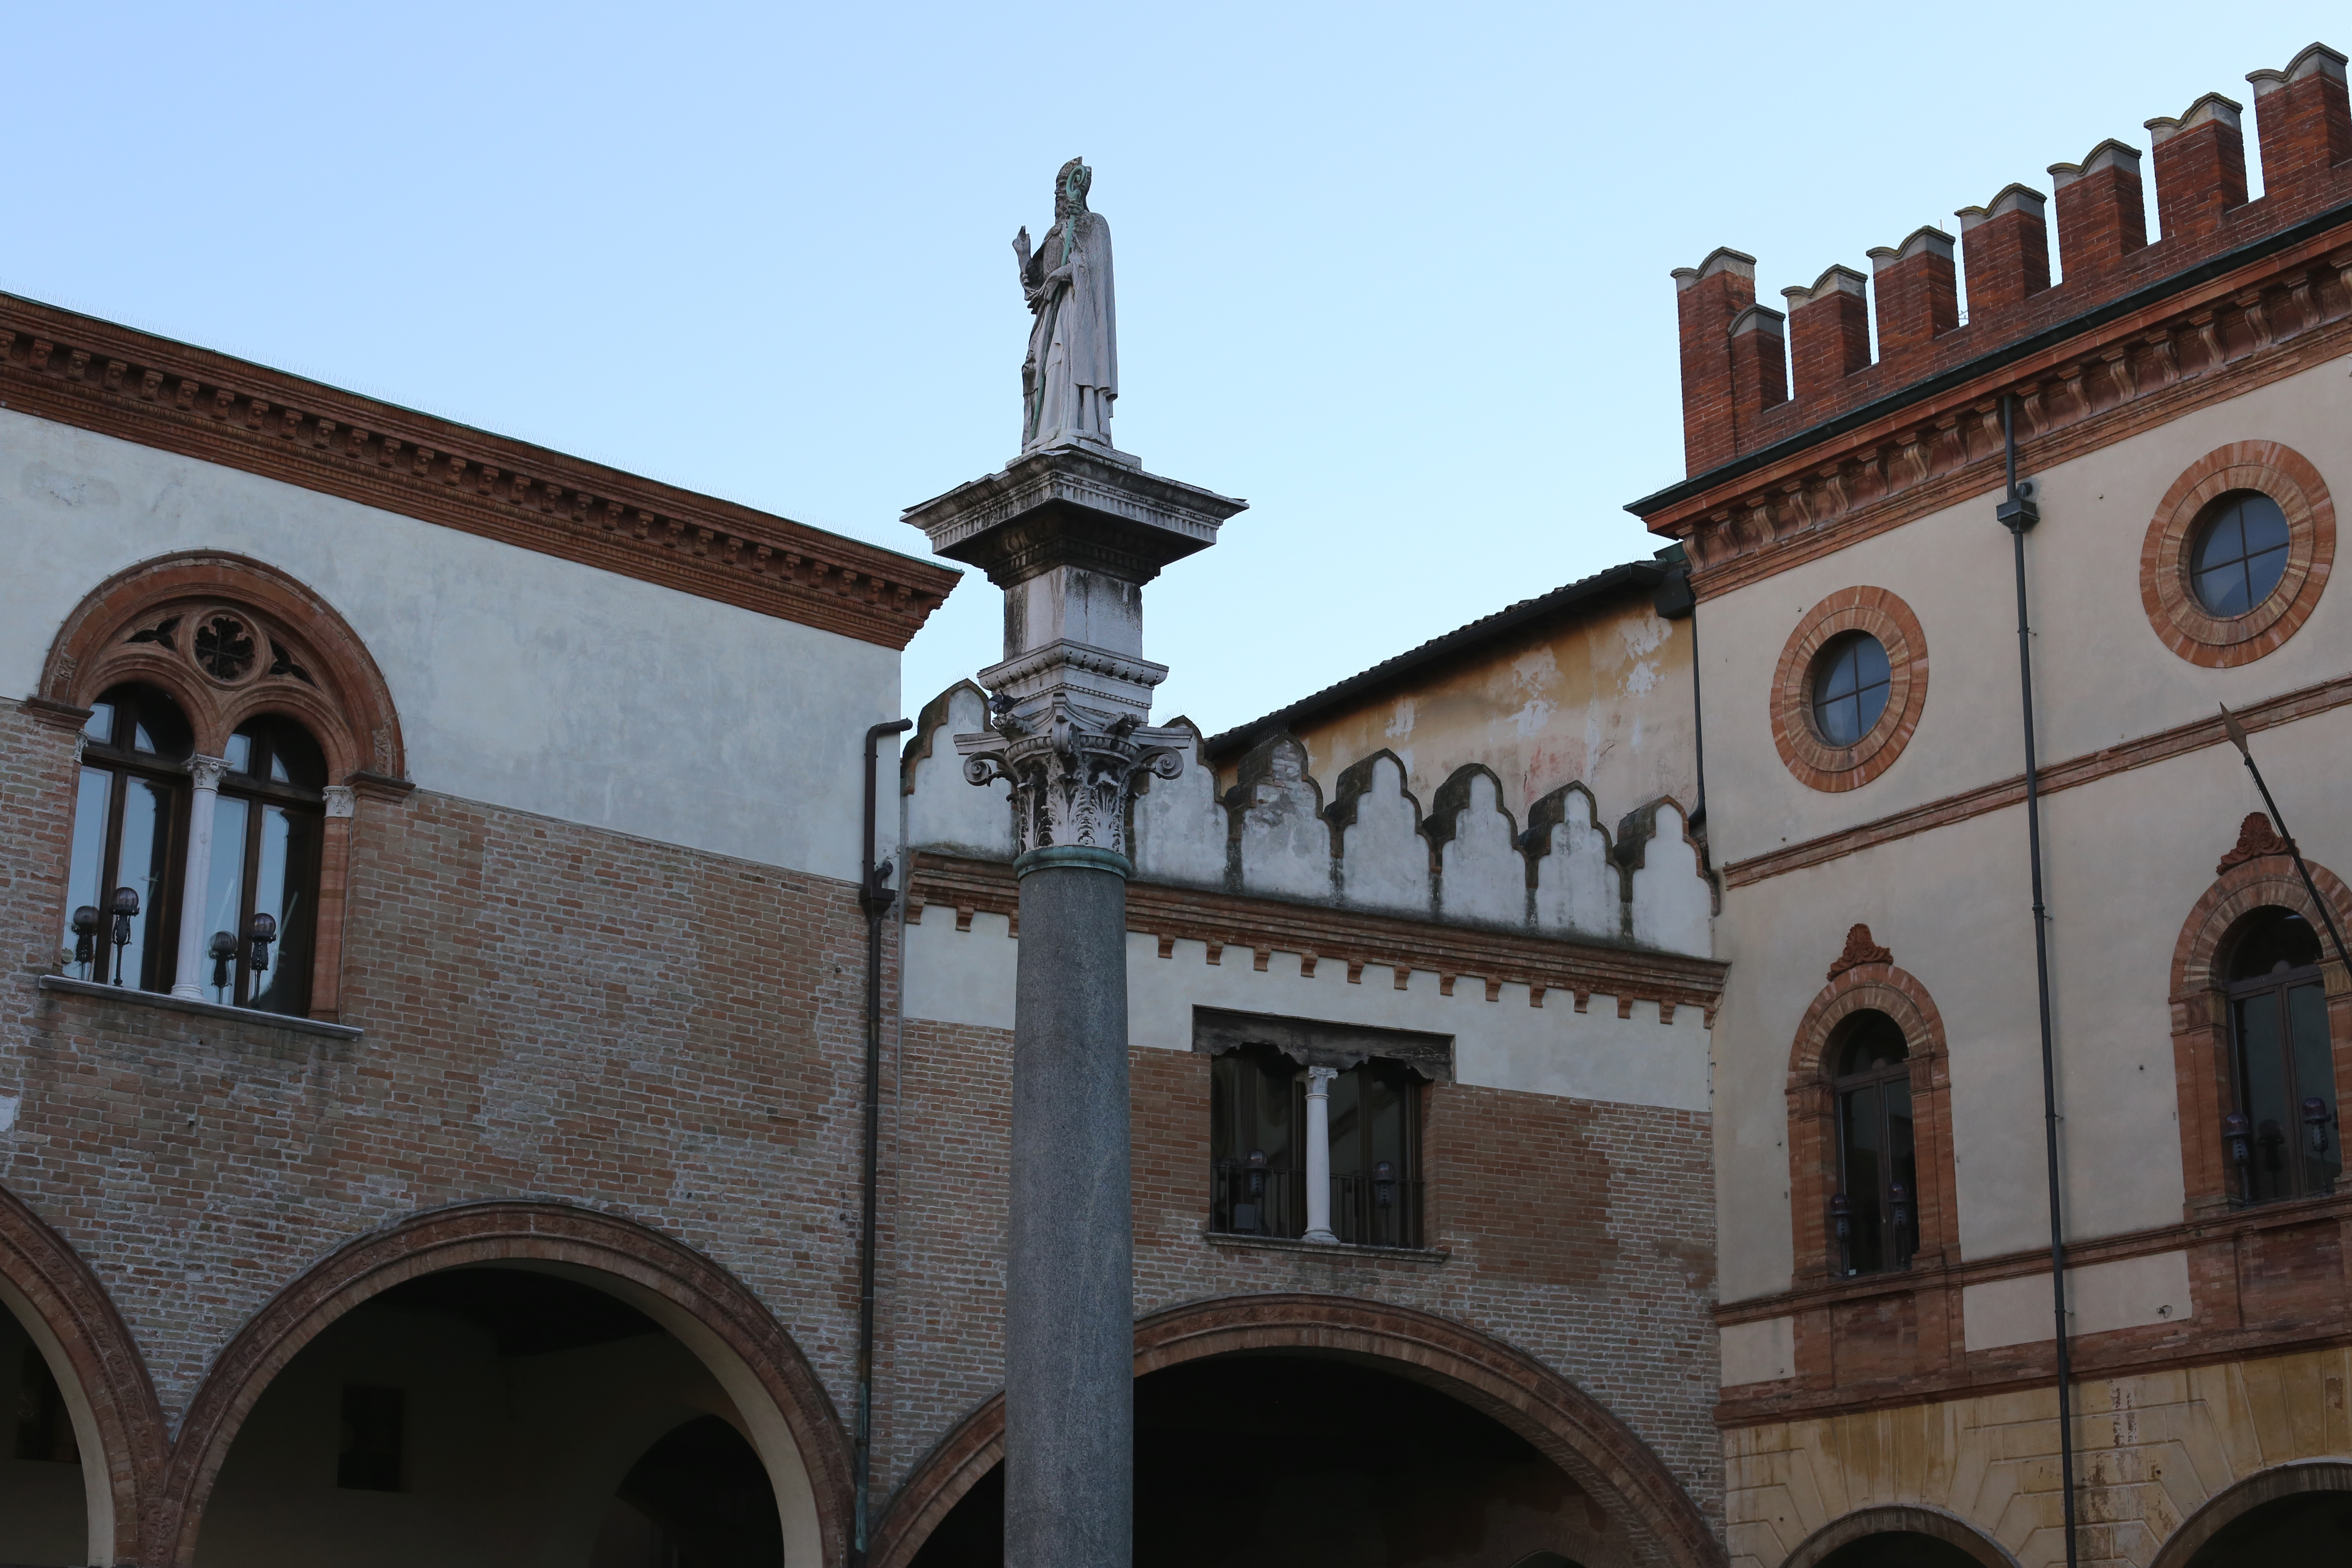 foto: https://upload.wikimedia.org/wikipedia/commons/5/5d/Ravenna%2C_Piazza_del_Popolo.jpg